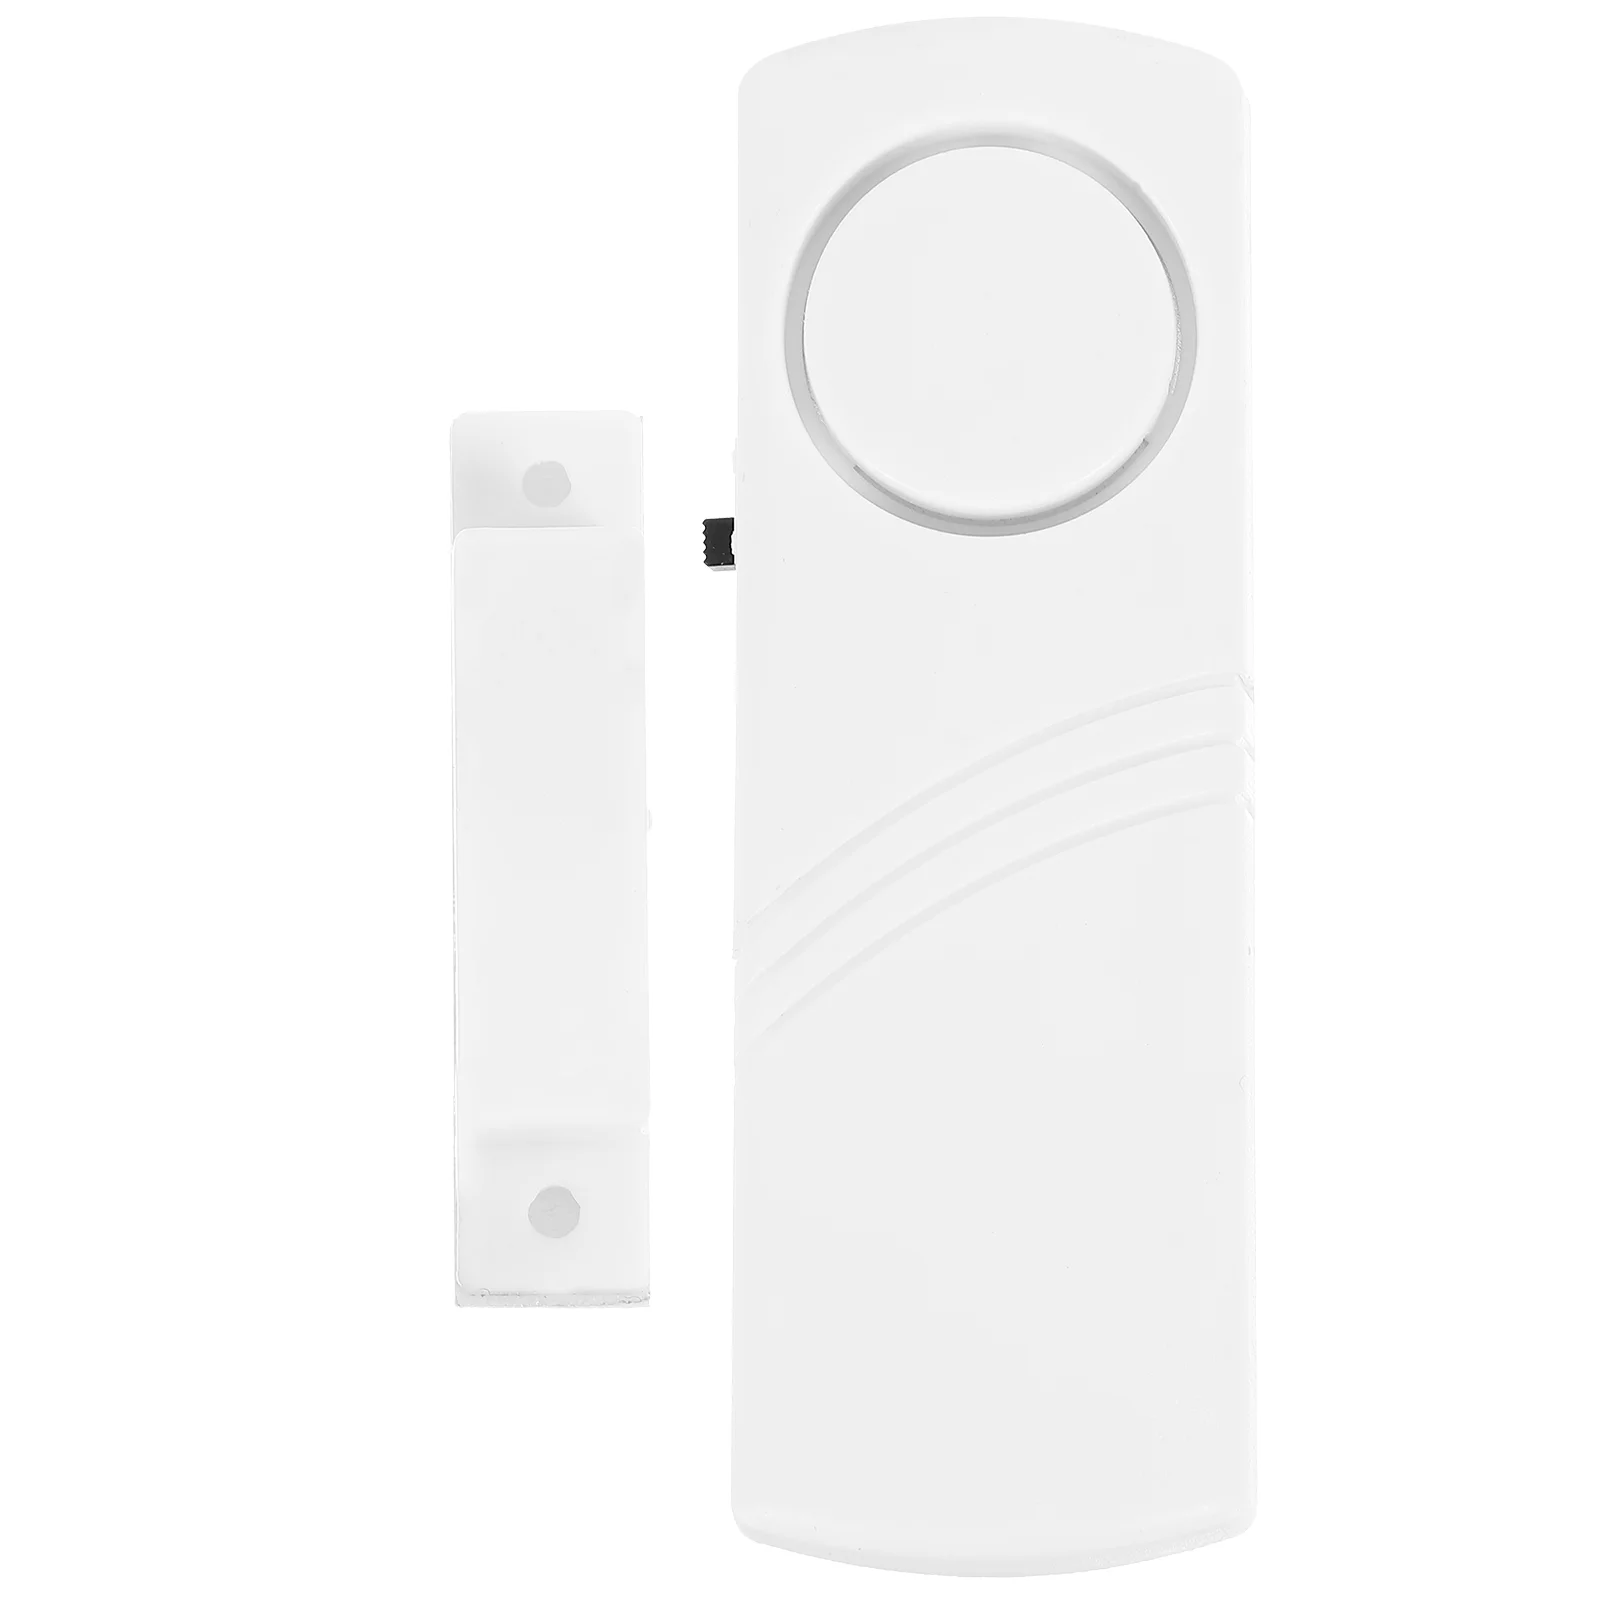 

Wireless Home Driveway Motion Sensor Alert Alarm System Door Window Chime Security Motion Sensor ( White)